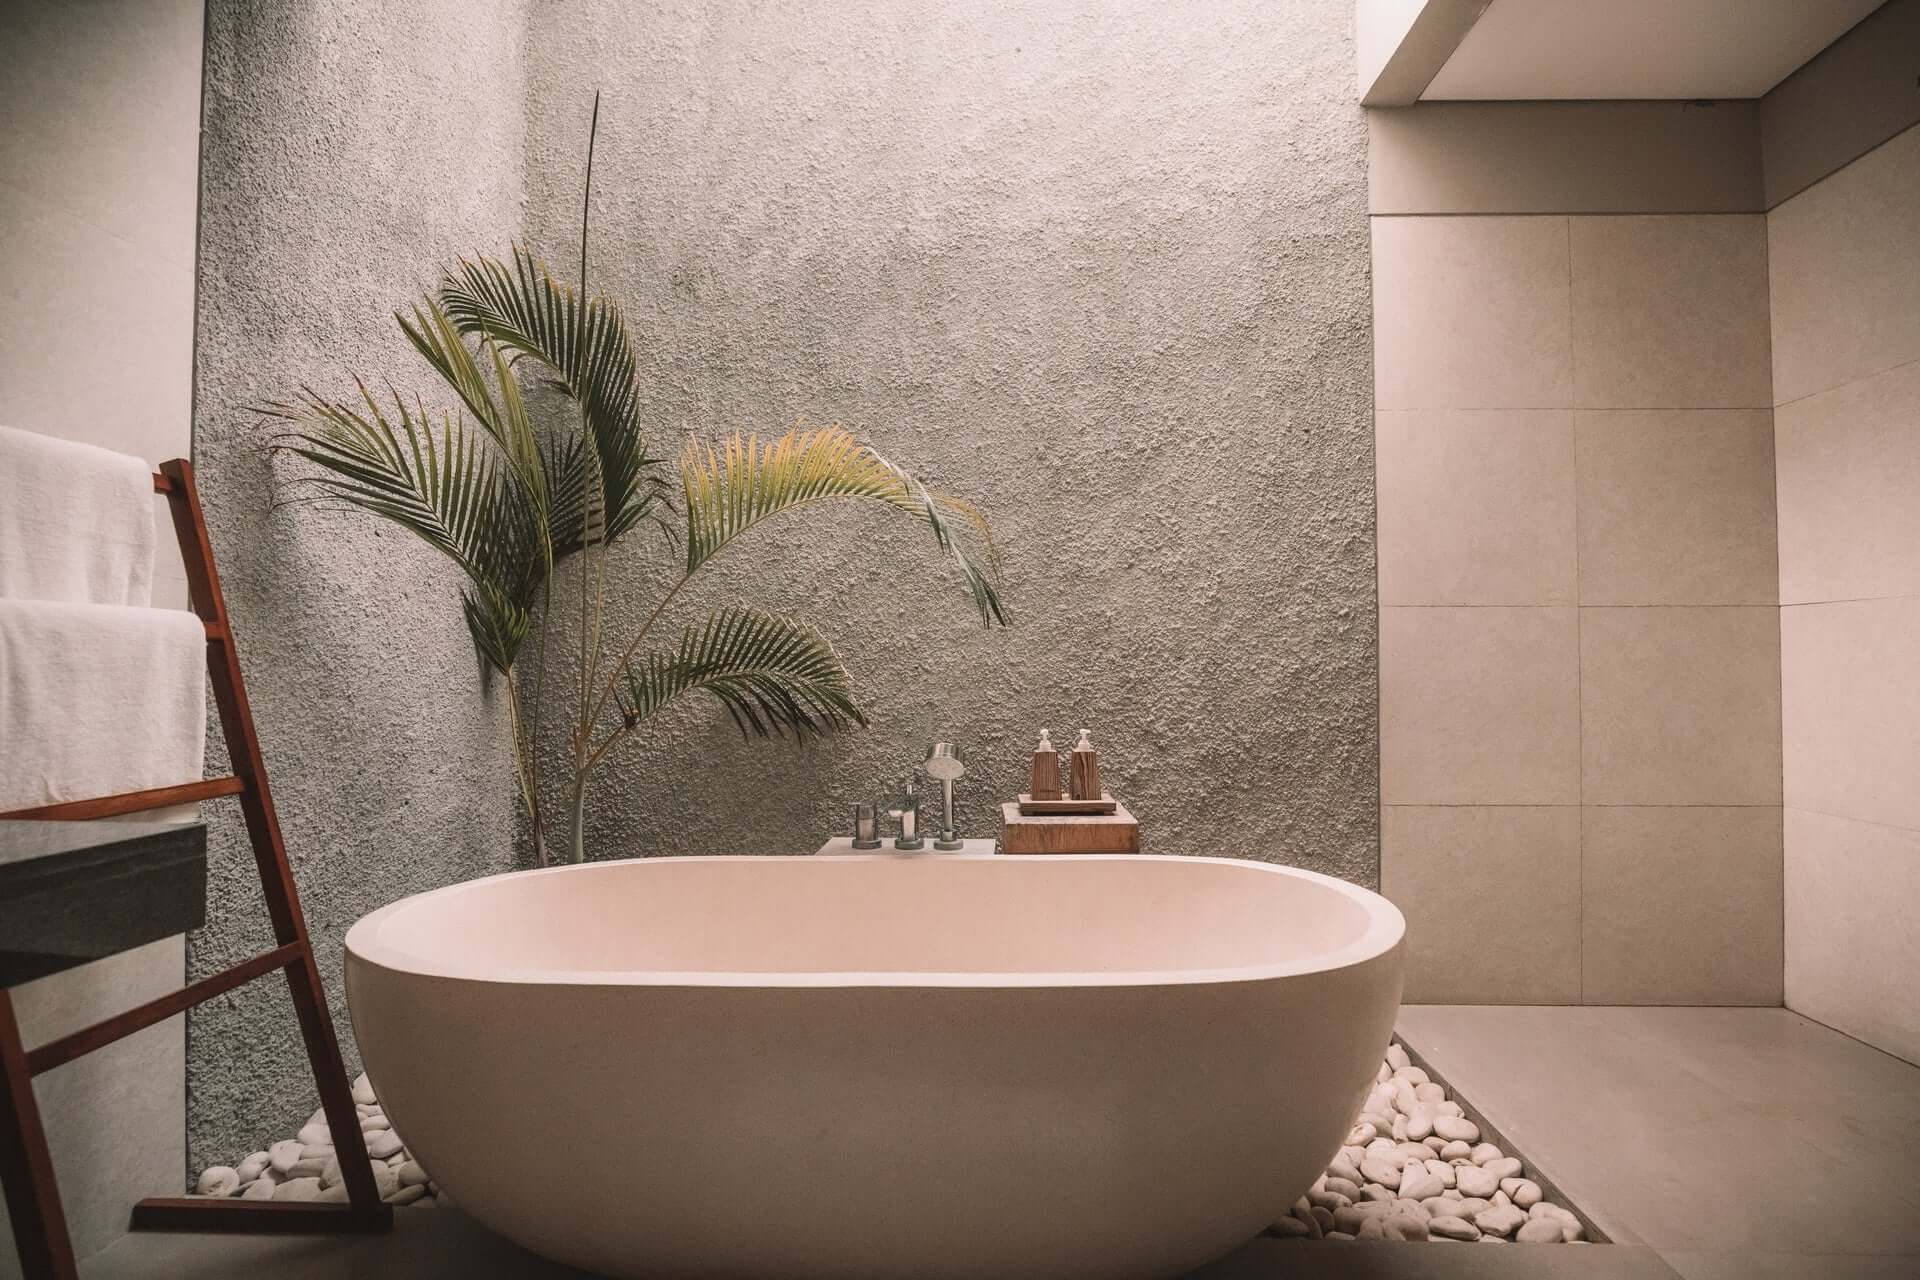 An earthtoned bathroom with an oval-shaped freestanding tub and a palm tree.